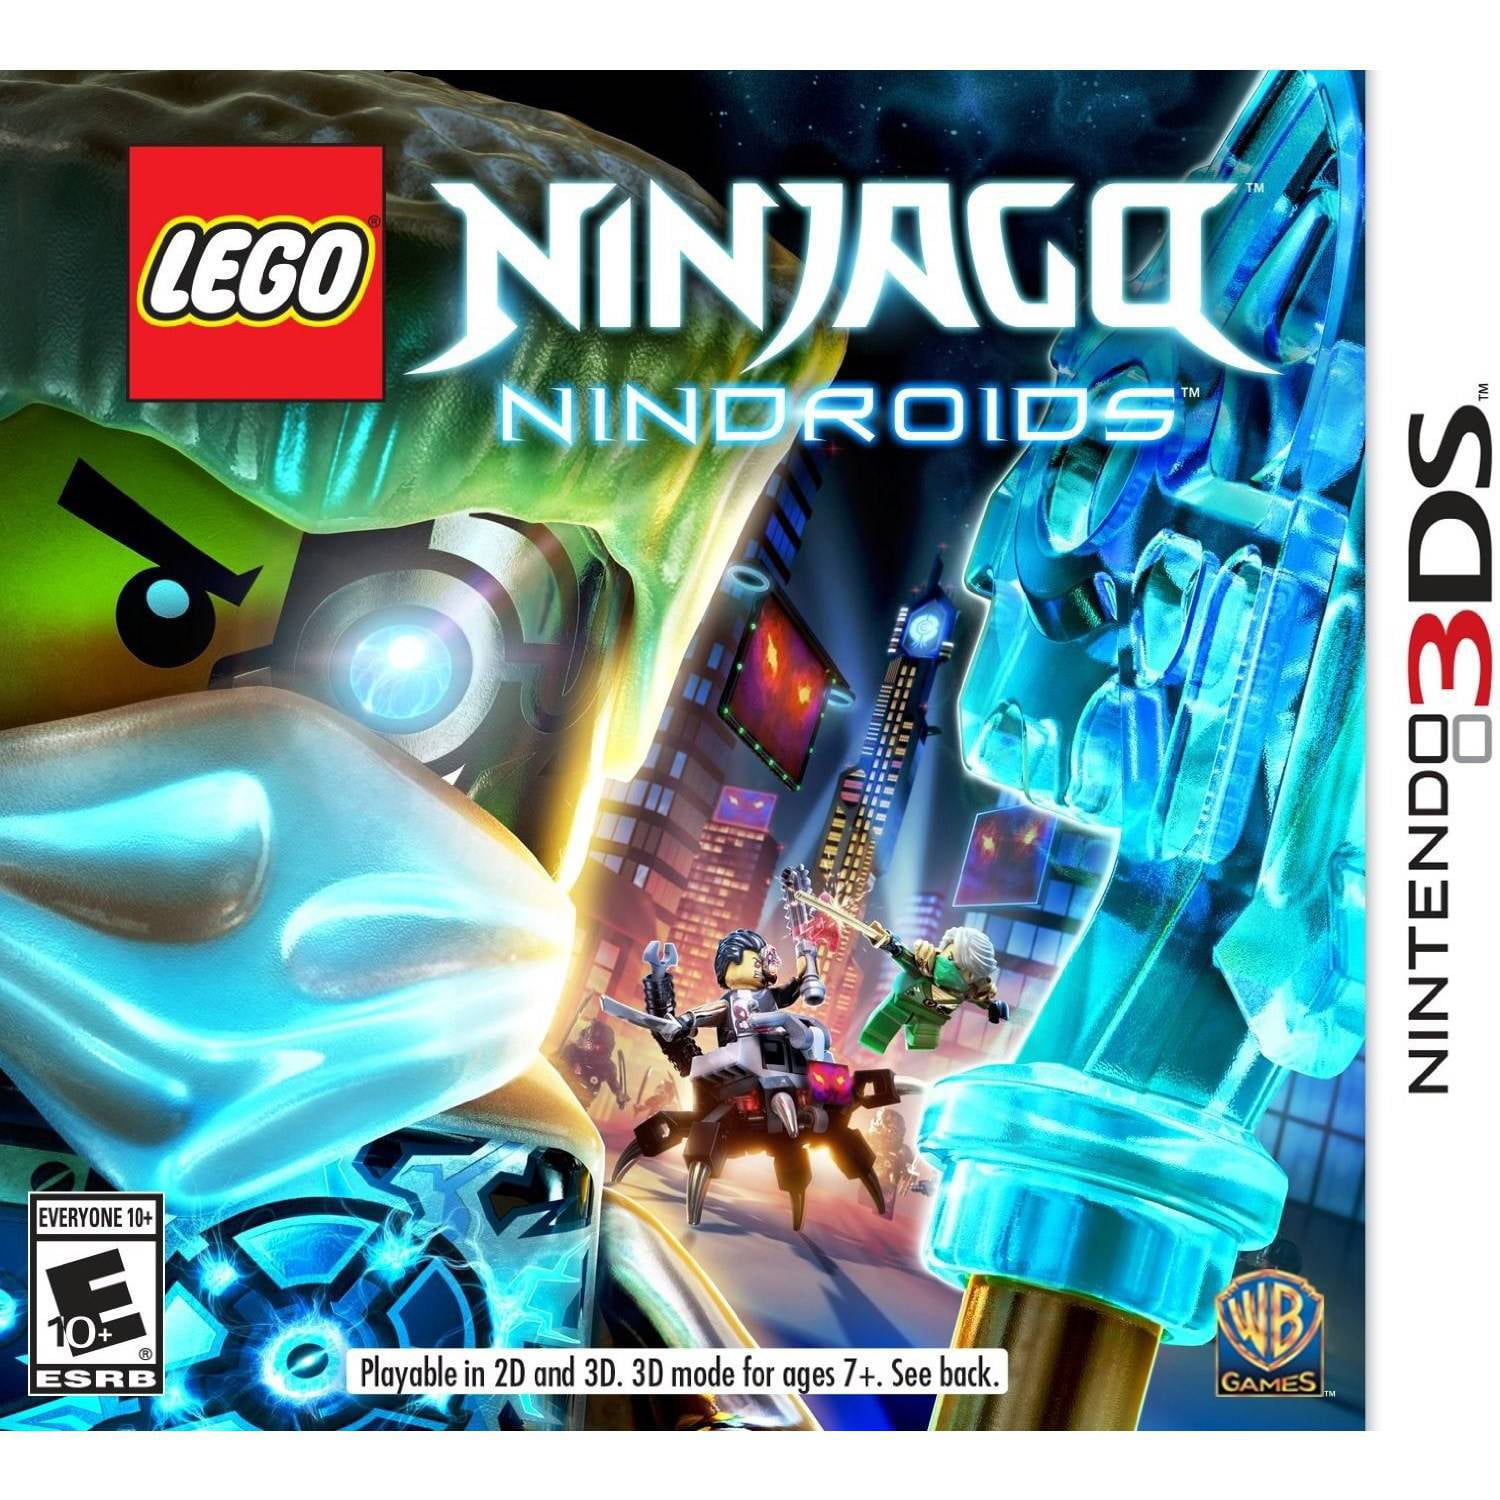 LEGO Ninjago Nindroids, Warner Bros, Nintendo 3DS, 883929418879 Walmart.com